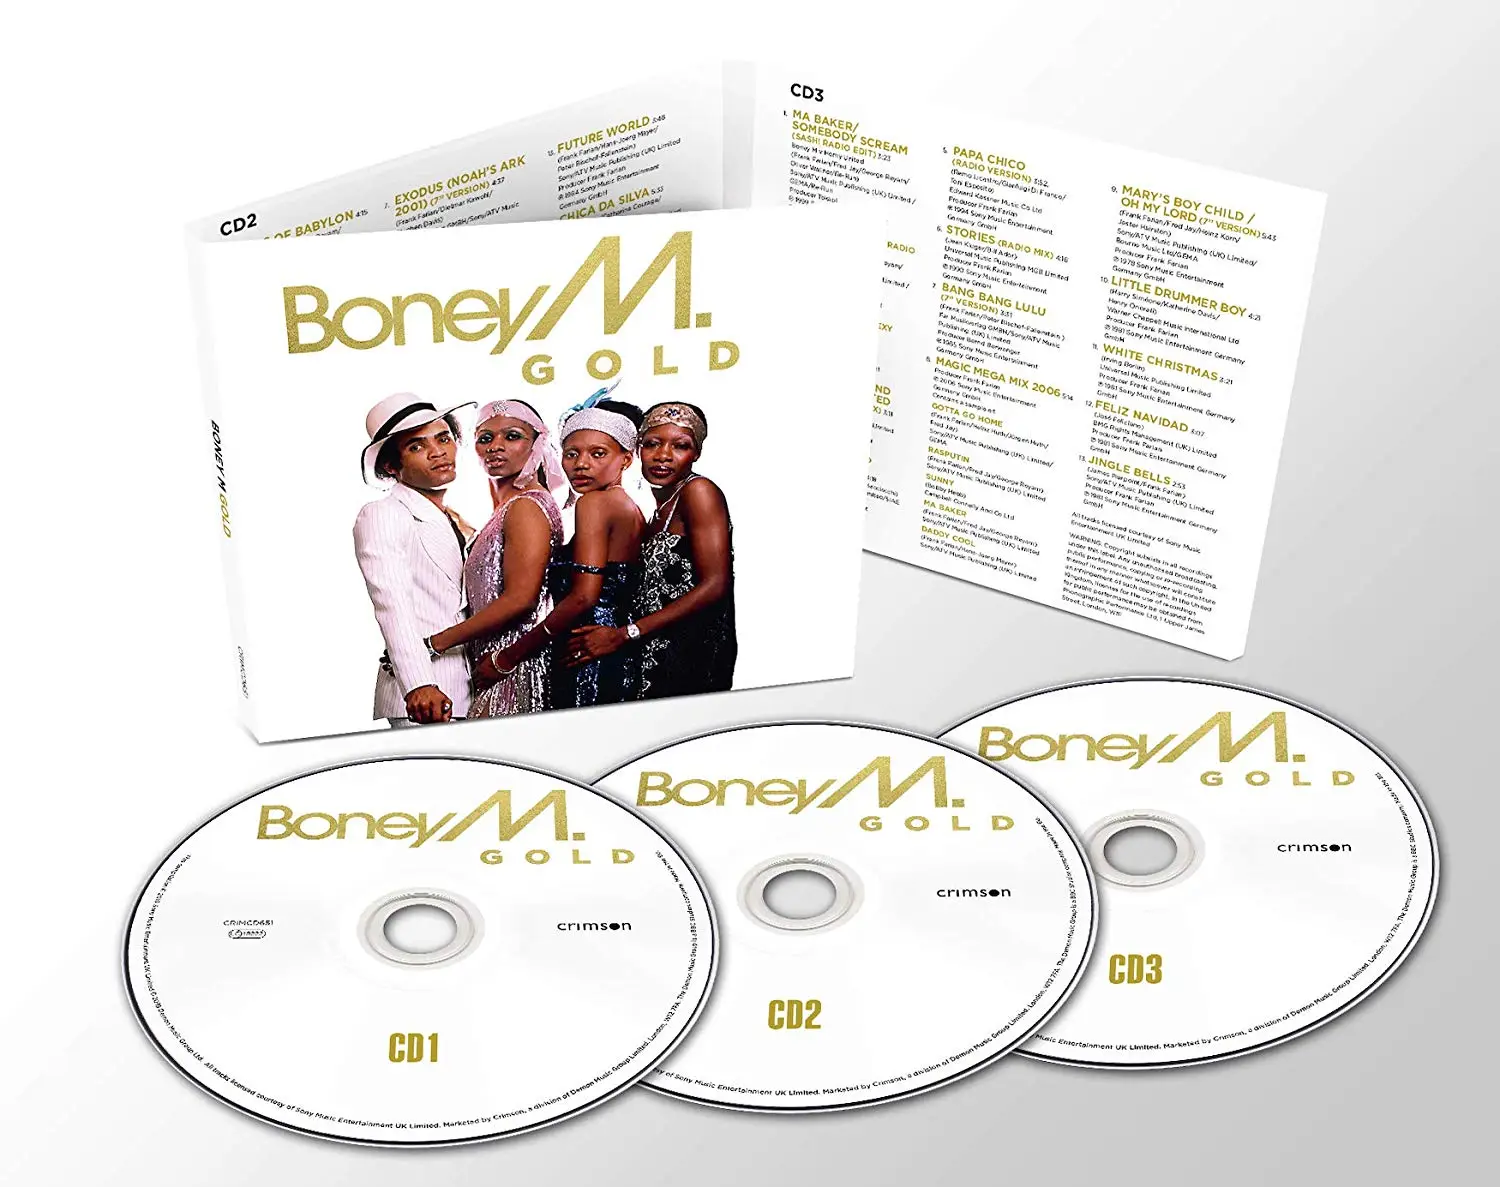 Boney m home. Boney m cd1. Boney m Gold 3 CD. Boney m CD. Boney m 2019 Gold.